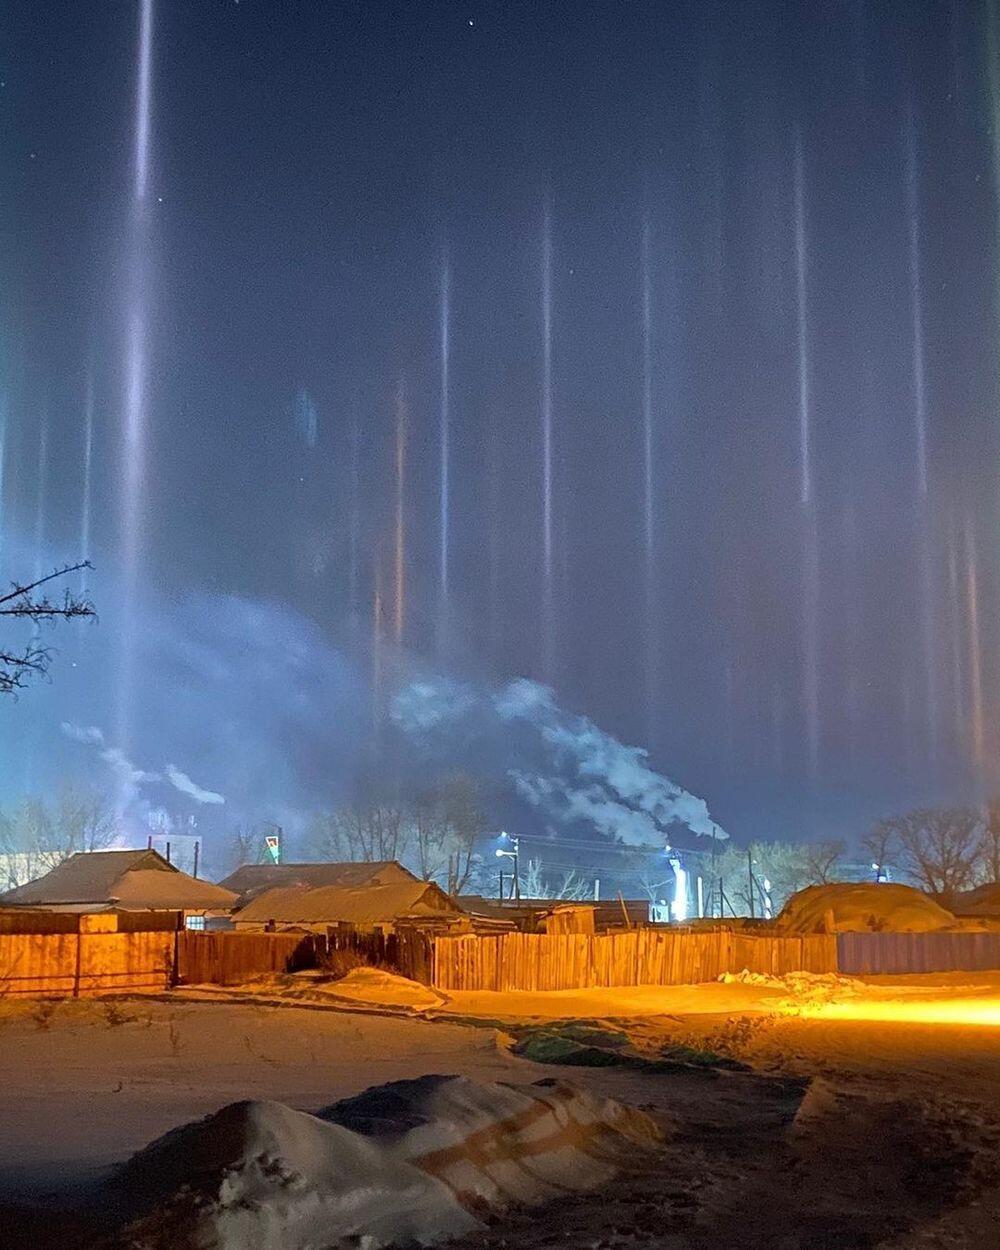 Light pillars captured in northern Kazakhstan's winter sky. Images | instagram/tipavlo.dar